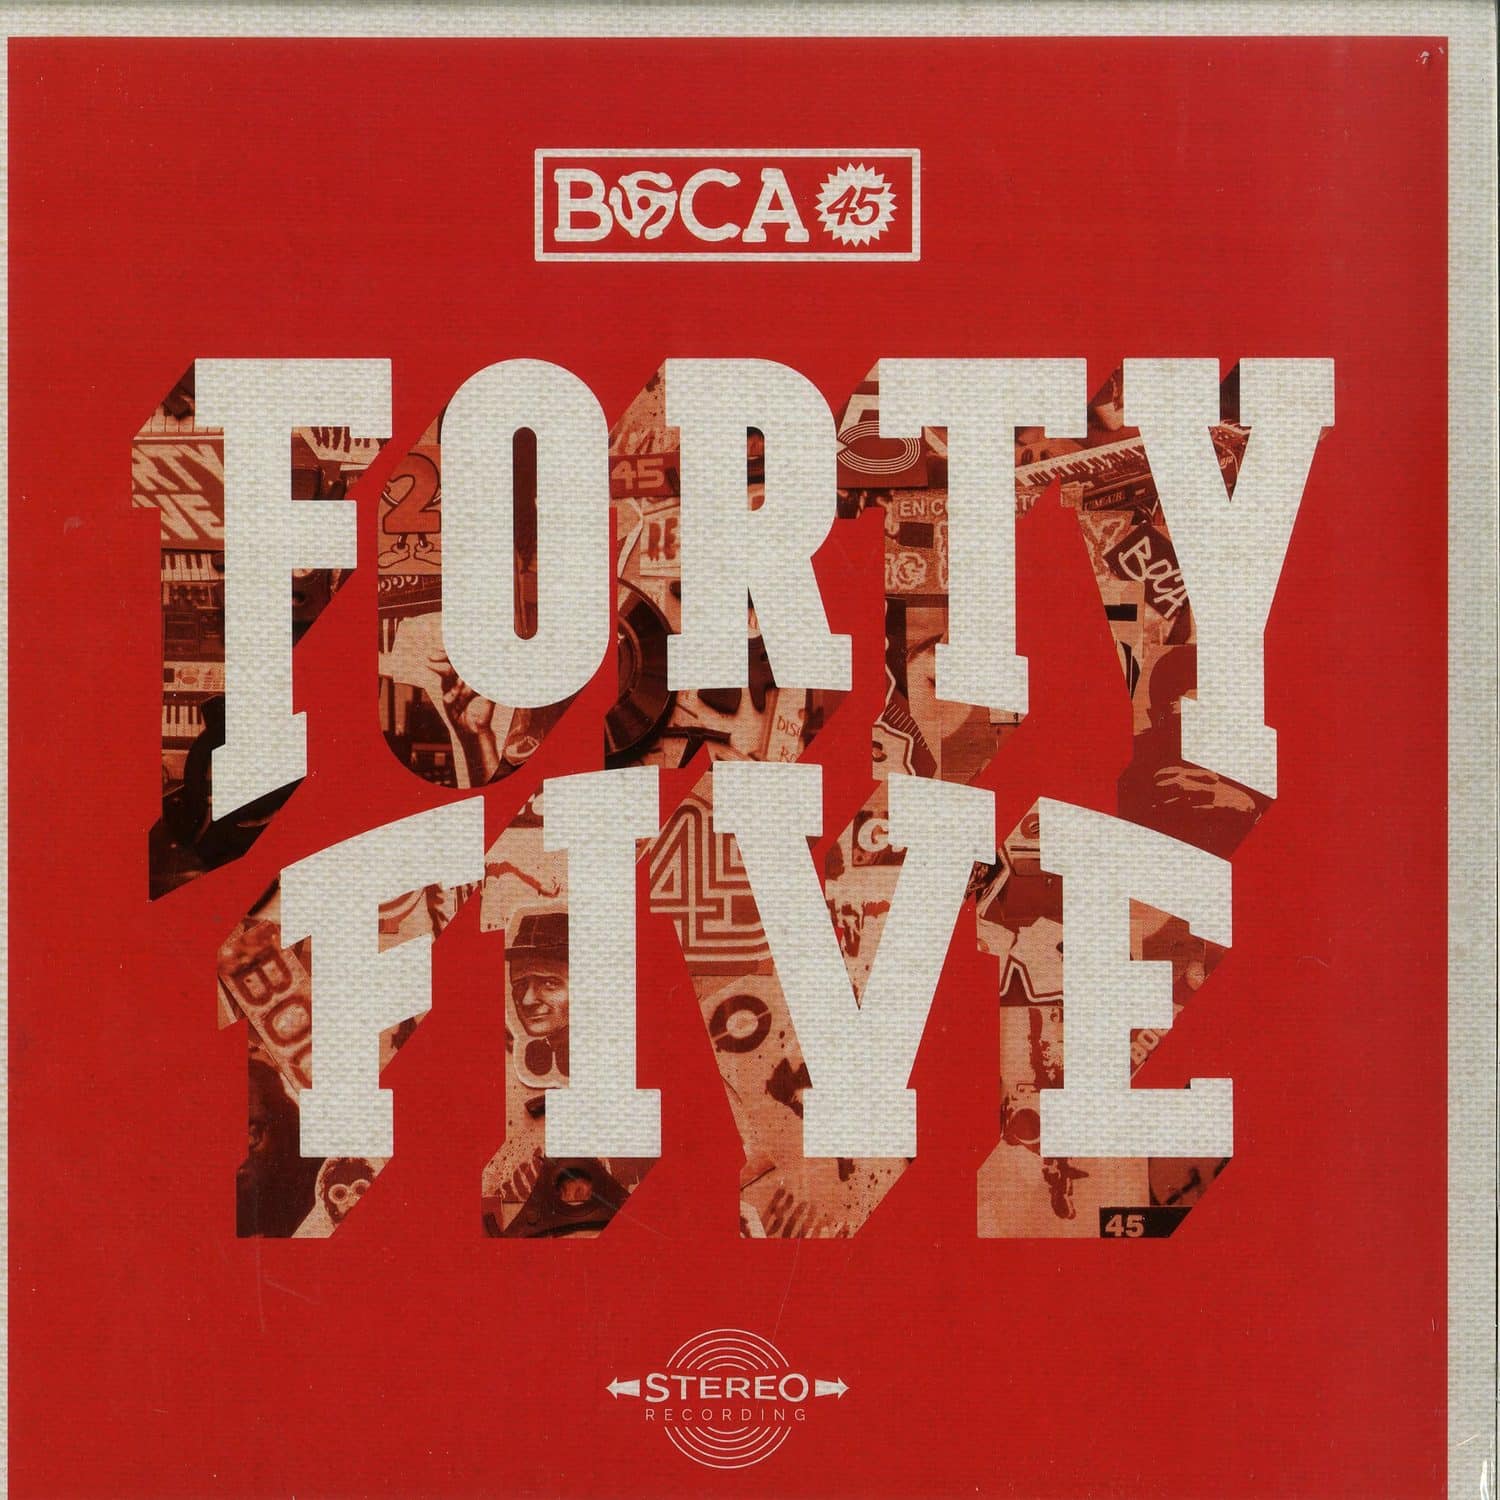 Boca 45 - FORTY FIVE 